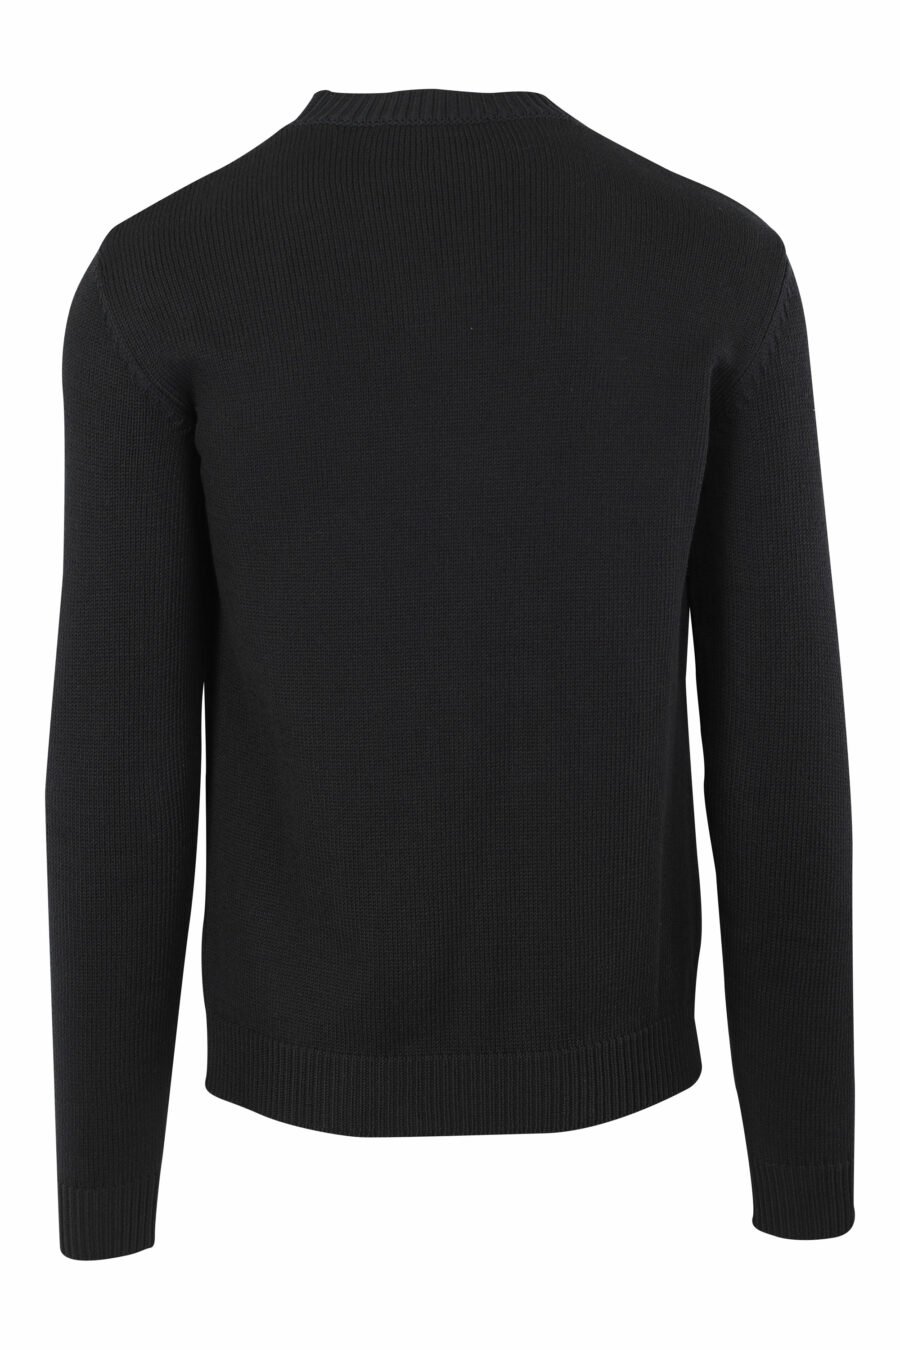 Black knitted sweatshirt with monochrome maxilogue - IMG 9662